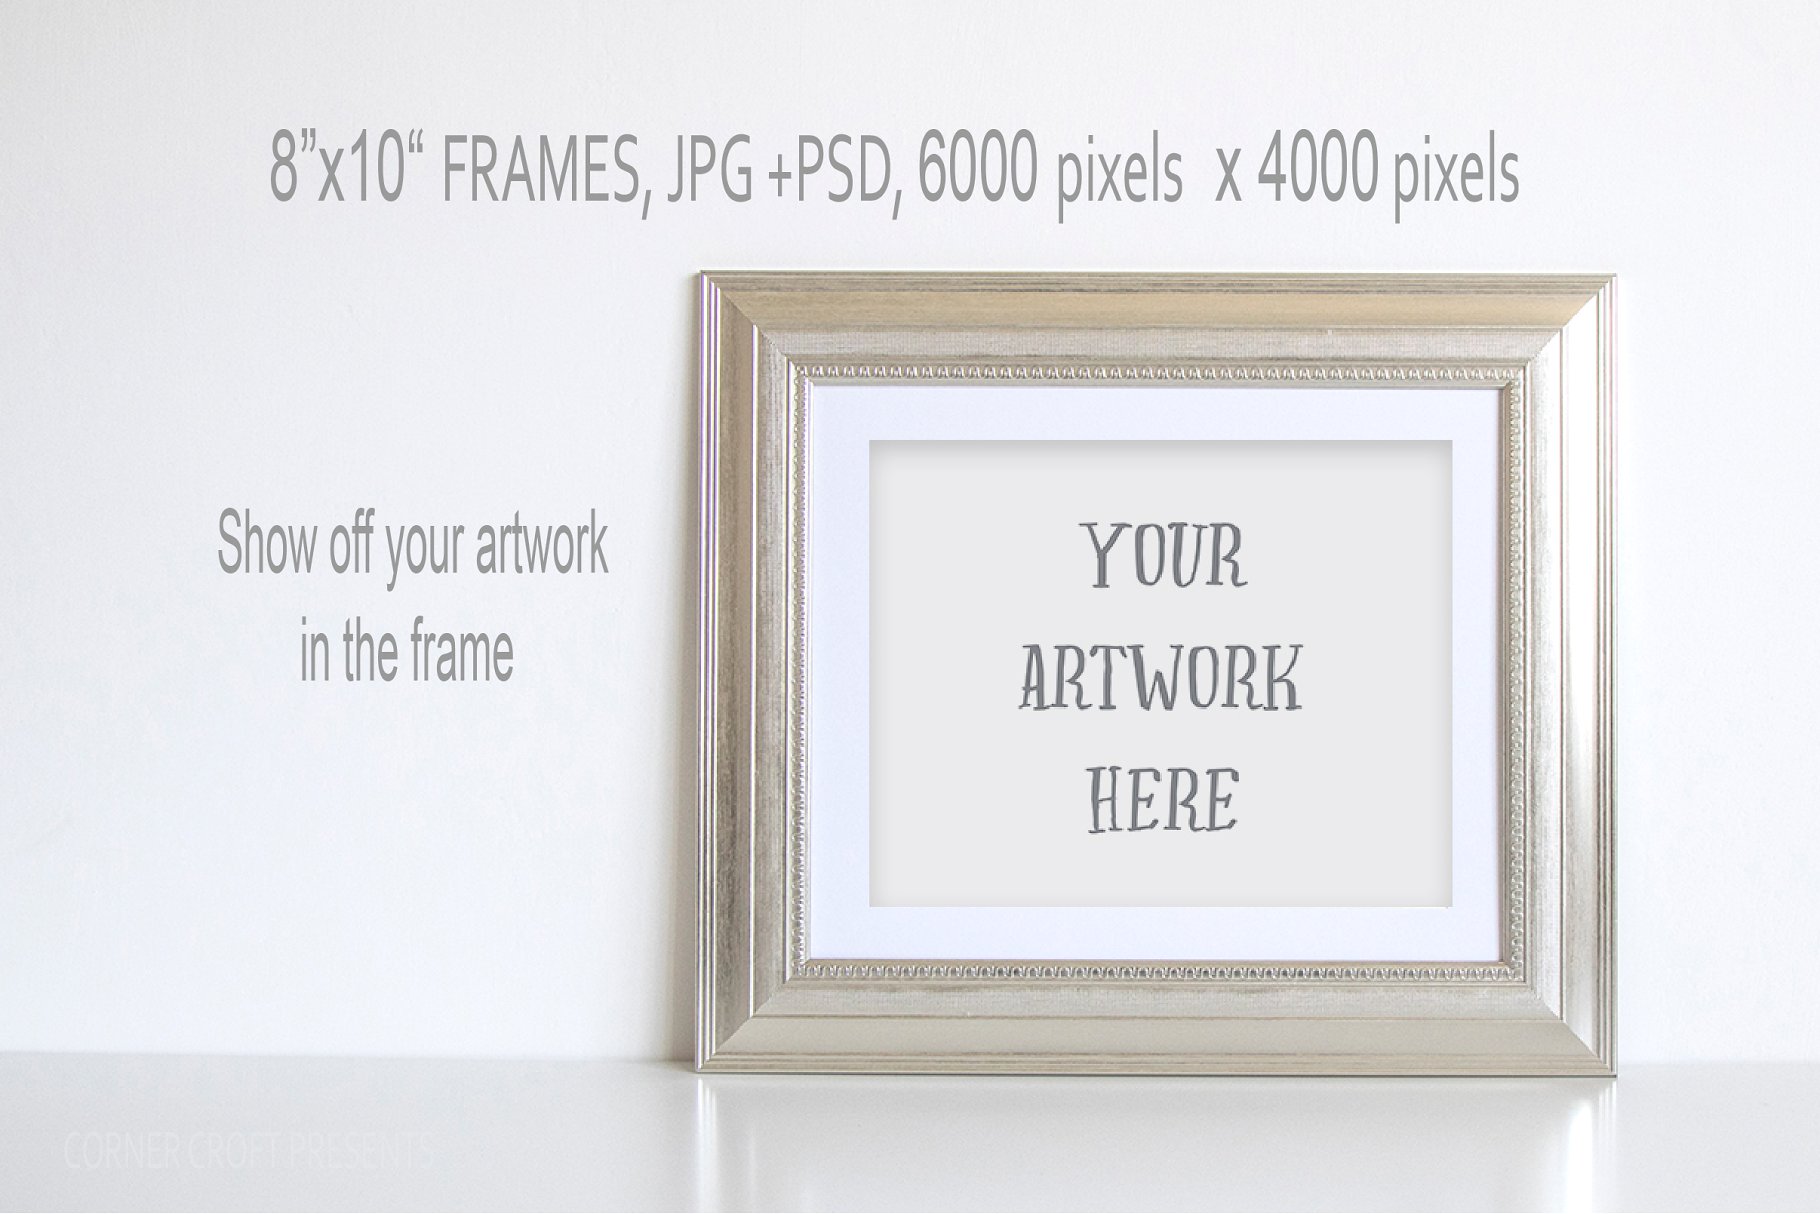 银色金属画框相框样机 Silver Frame Product Mockup Bundle插图(1)